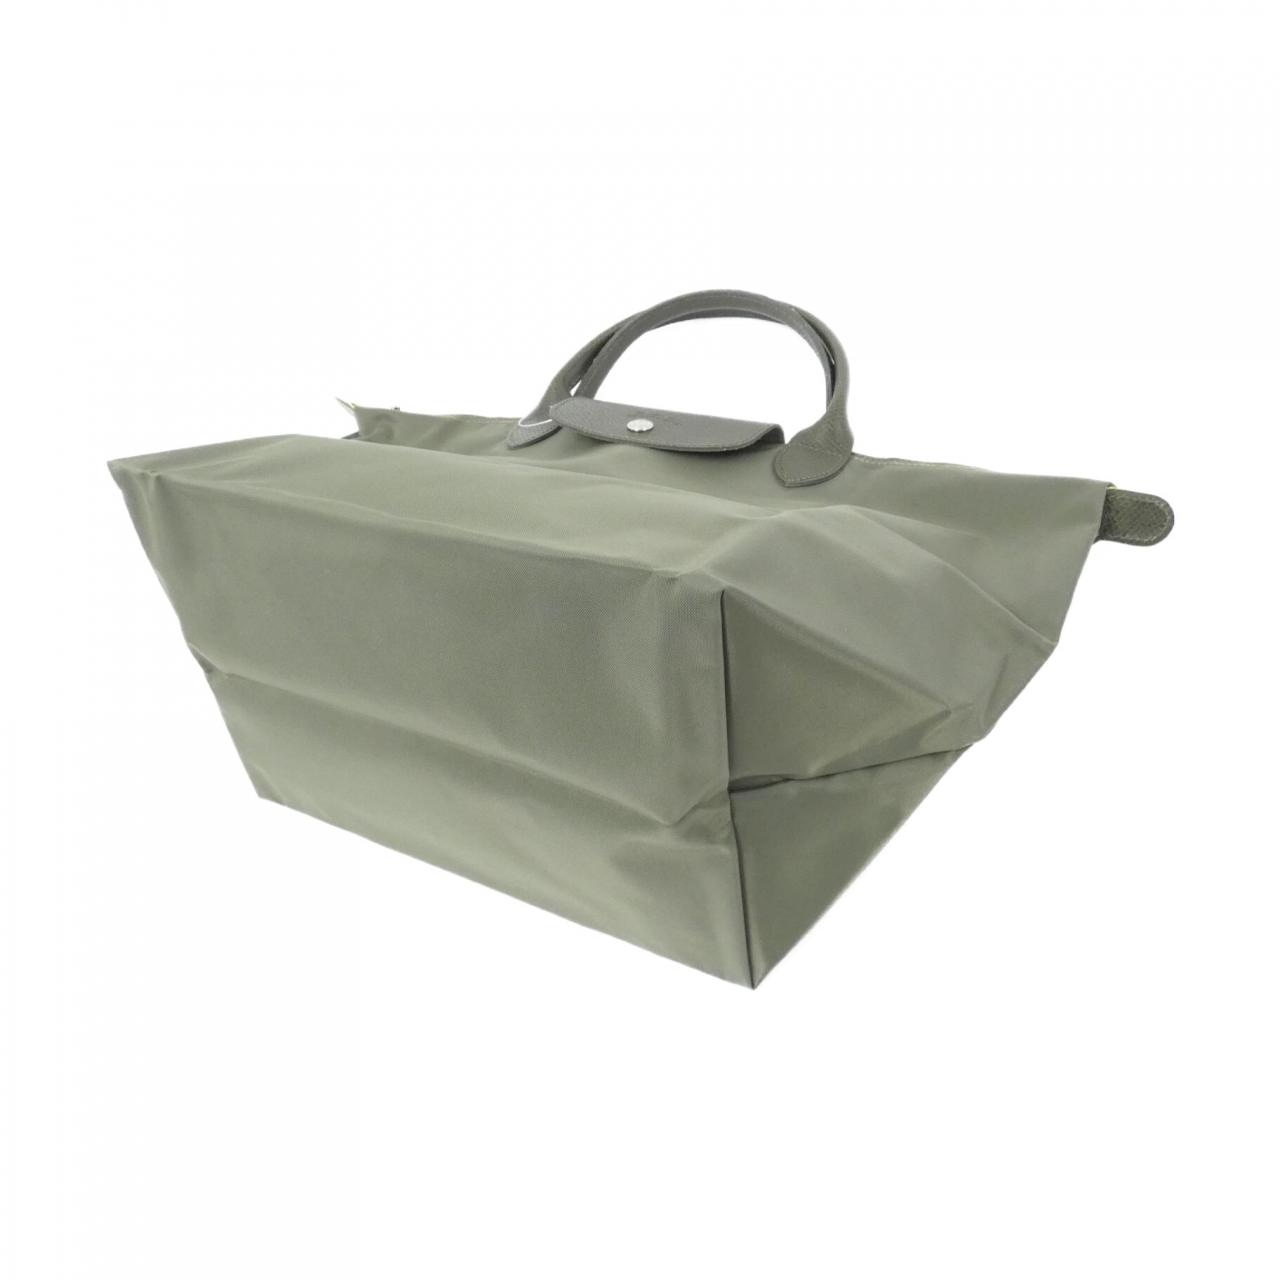 [BRAND NEW] Longchamp Le Pliage Green 1623 919 Bag